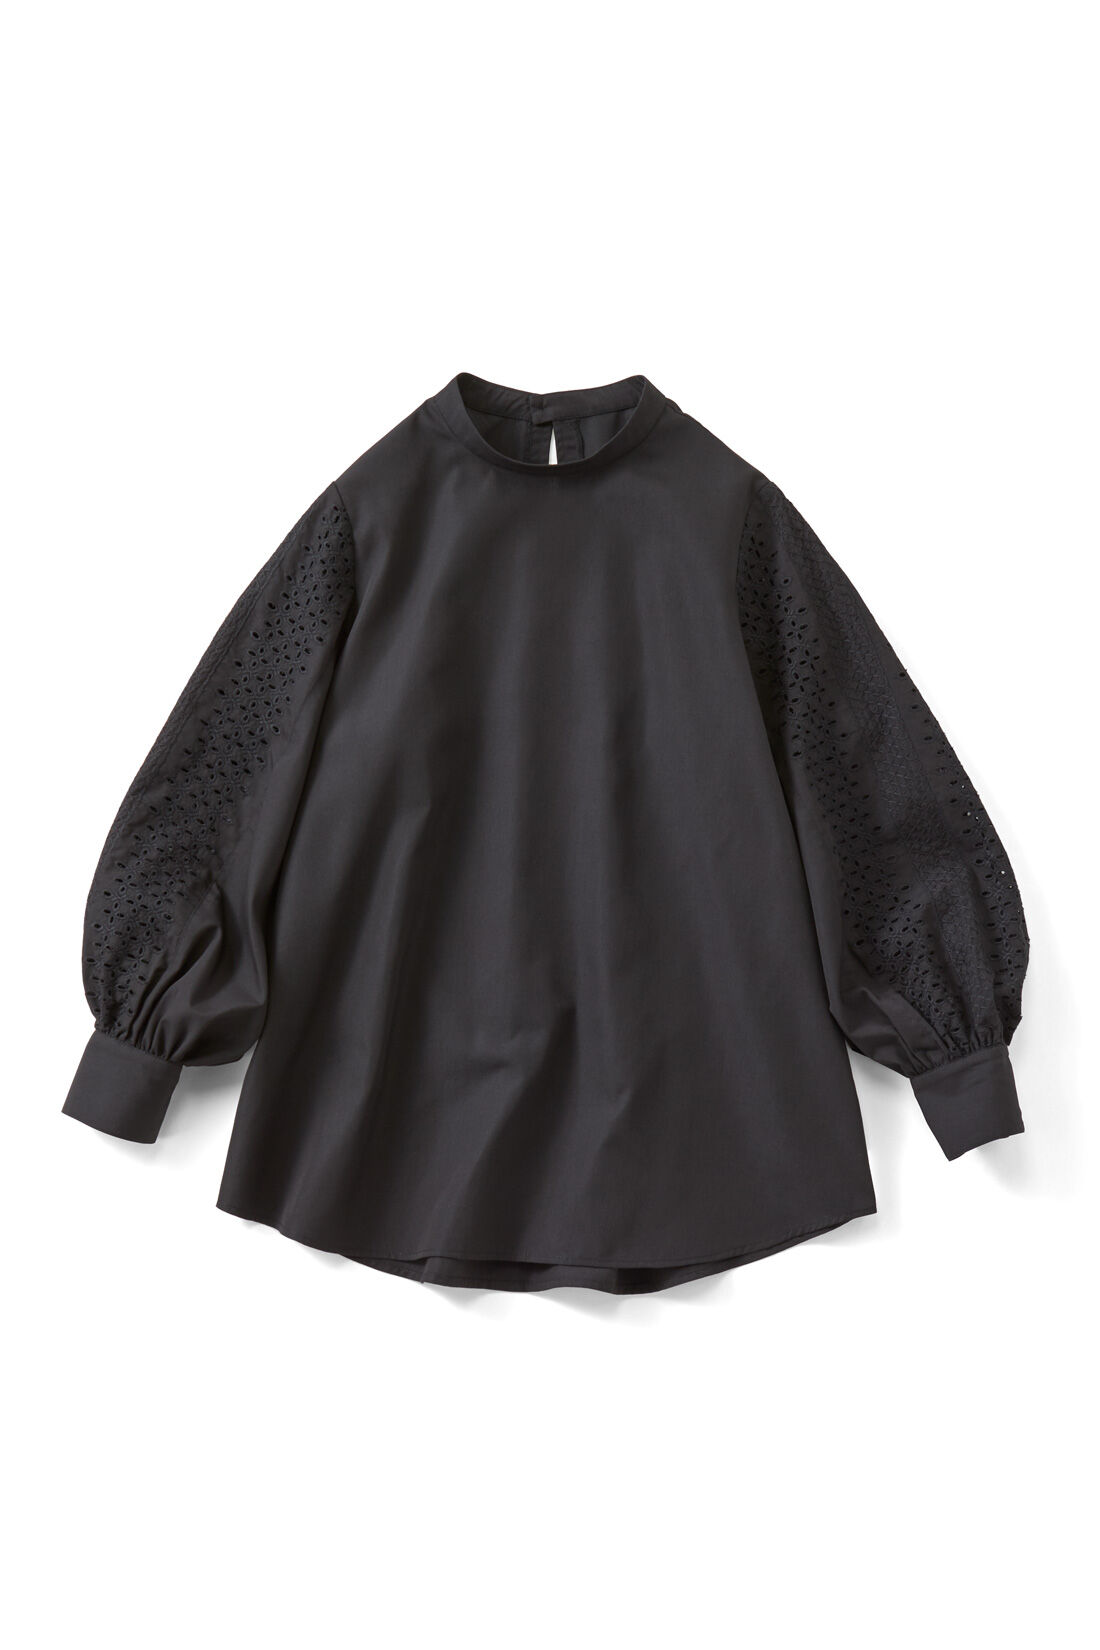 DRECO by IEDIT|【3～10日でお届け】IEDIT[イディット]　アンティーク風デザインの袖レースブラウス〈ブラック〉|ブラック